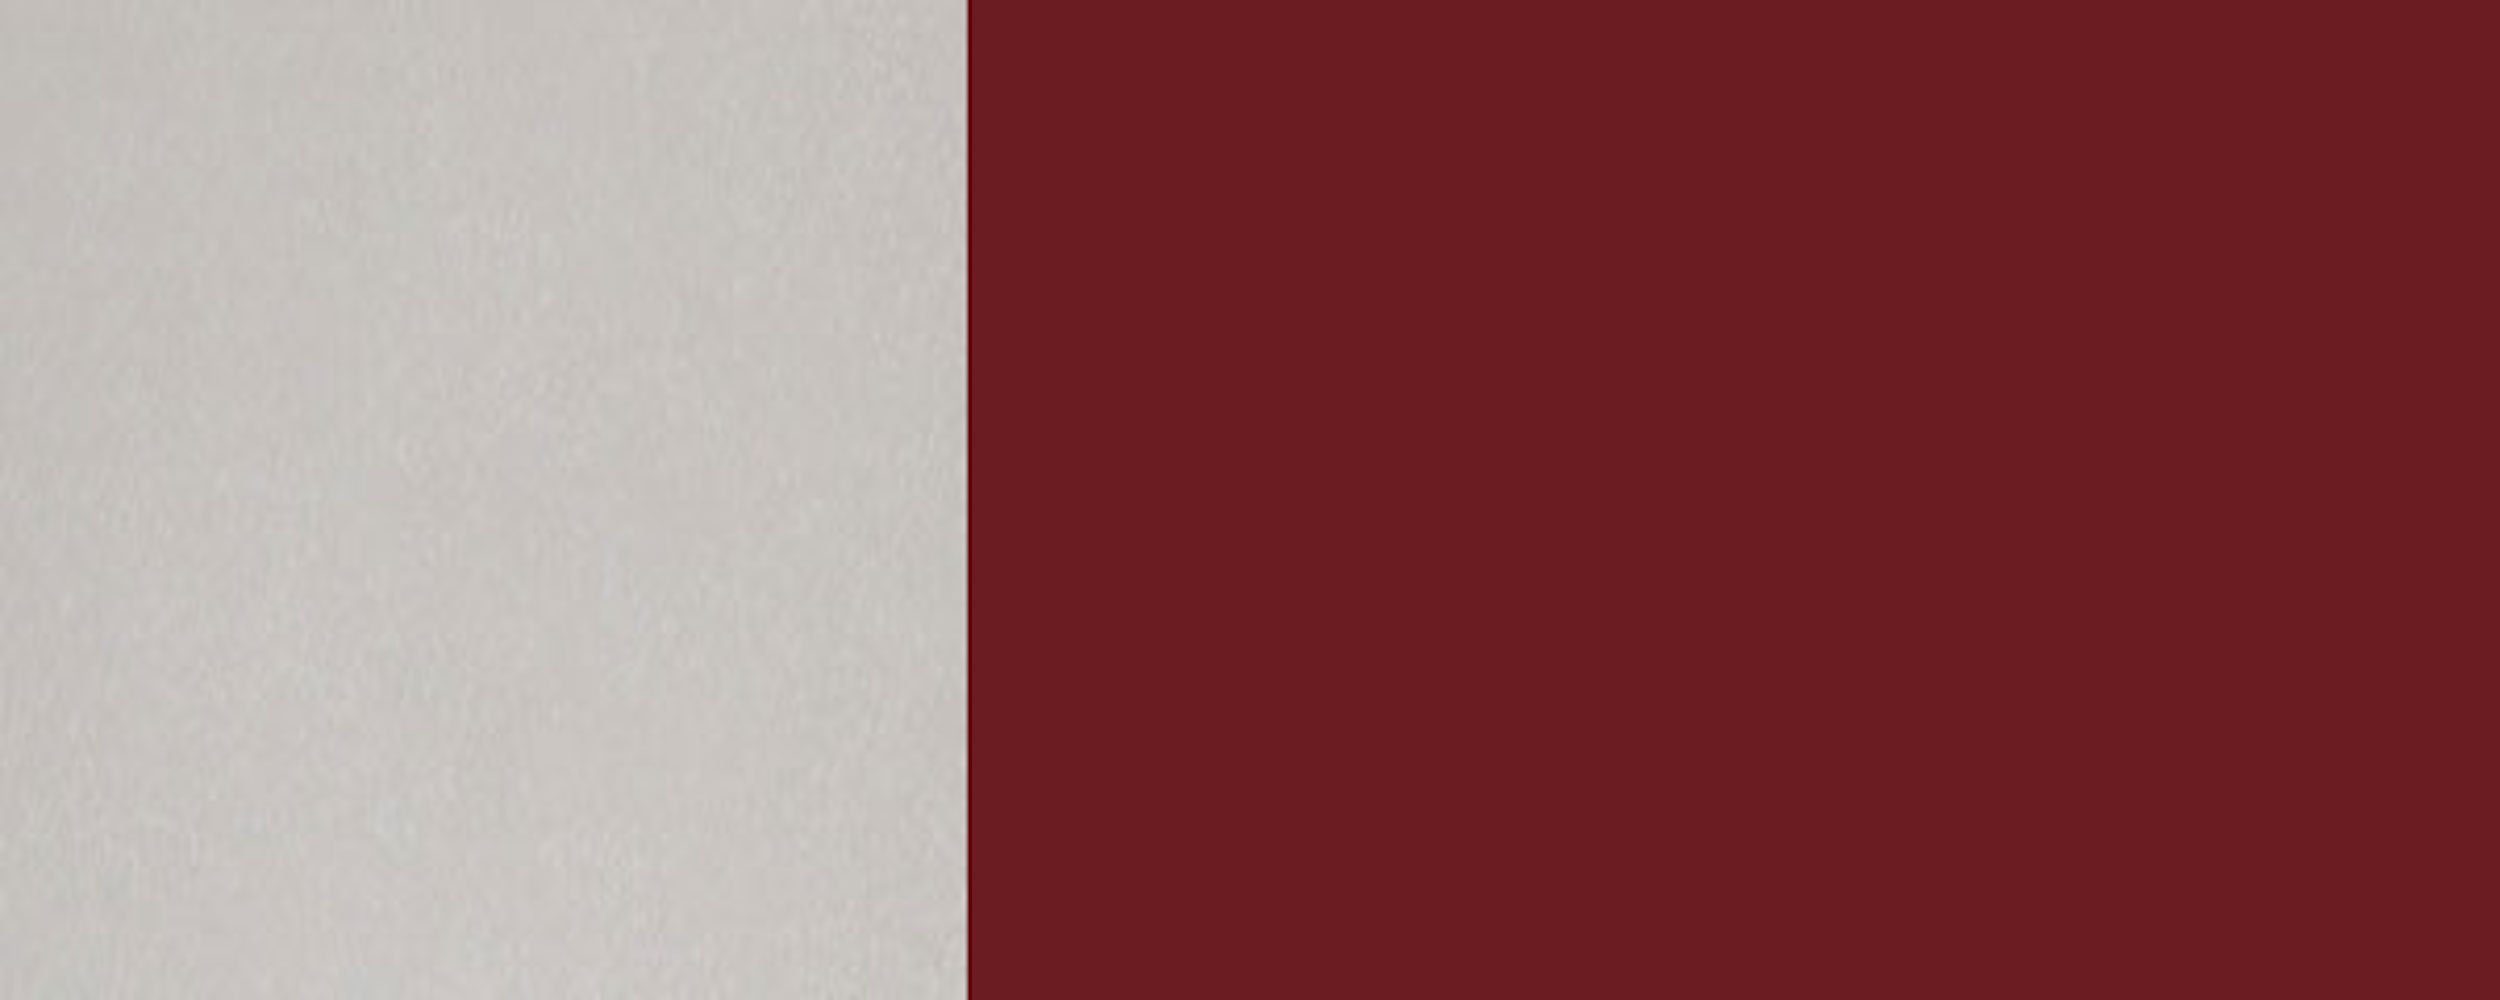 Feldmann-Wohnen Klapphängeschrank Rimini (Rimini) purpurrot 2-türig RAL Front- und Glaseinsatz wählbar matt mit 3004 Korpusfarbe 90cm